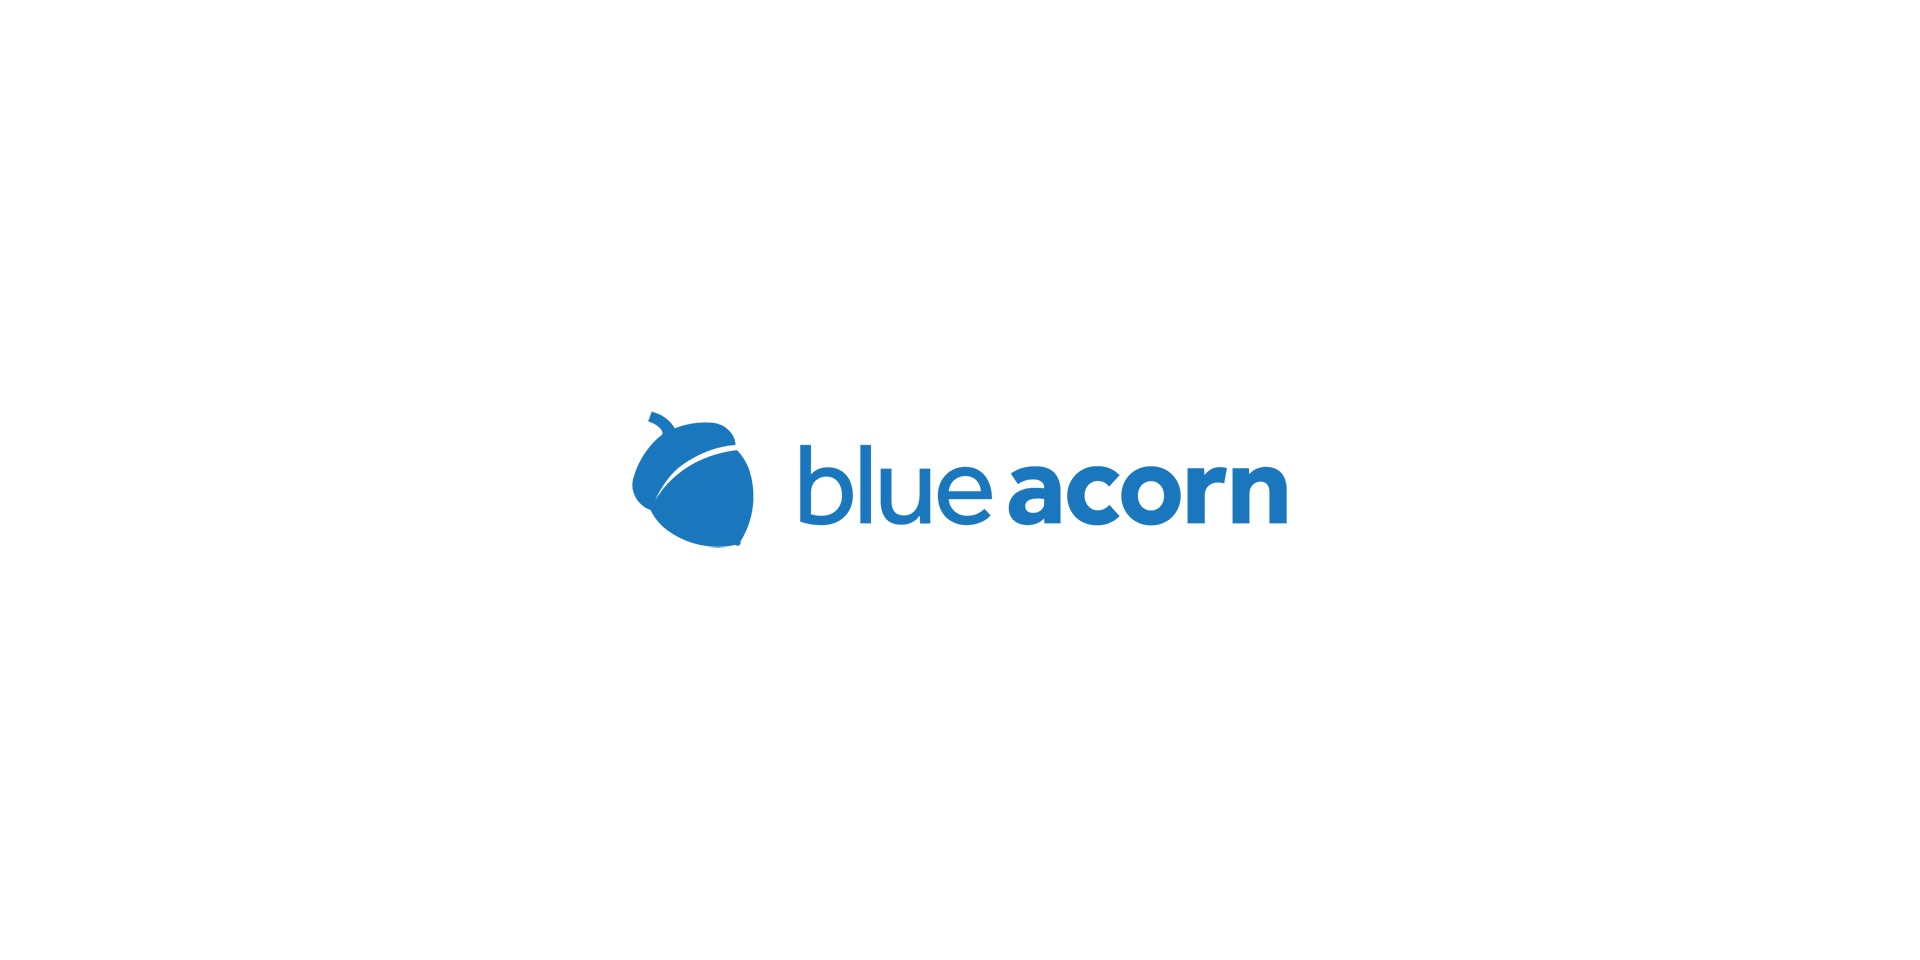 blue acorn application